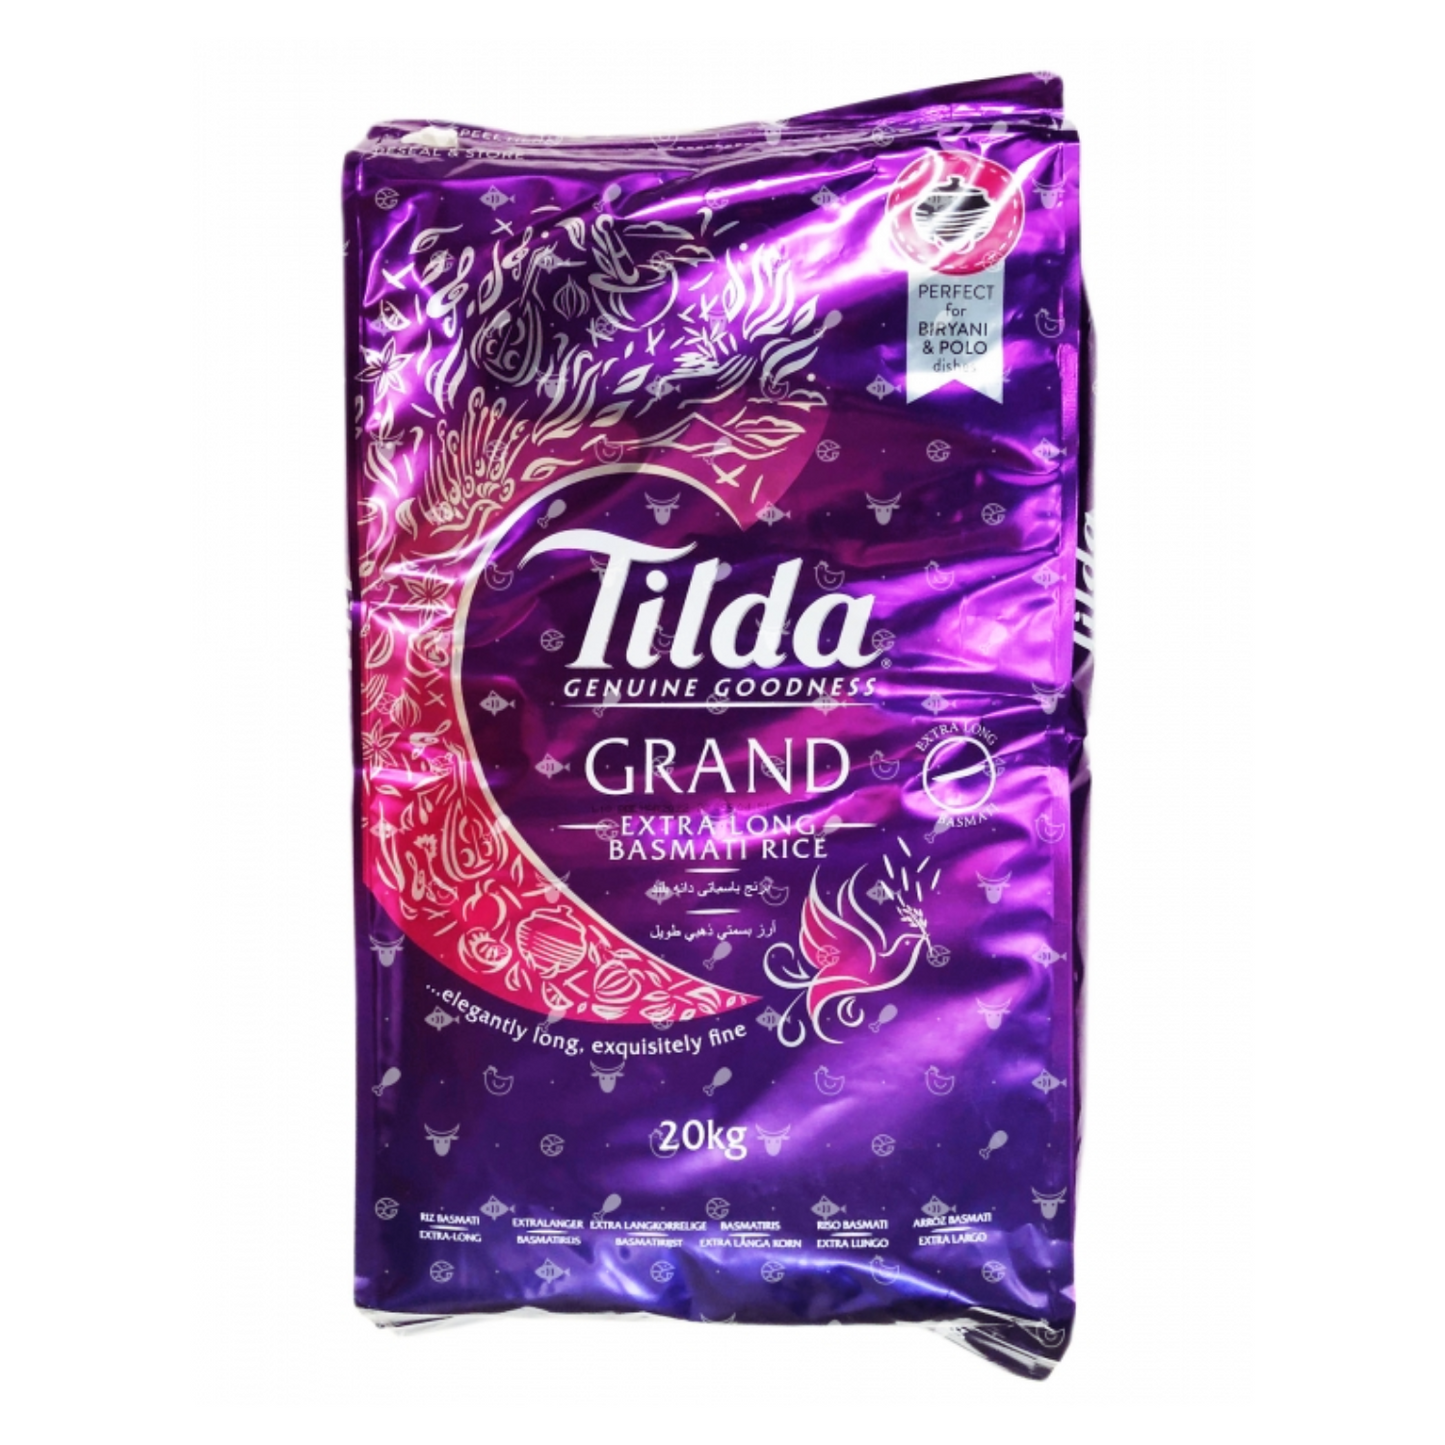 Tilda Grand Basmati Rice 20kg